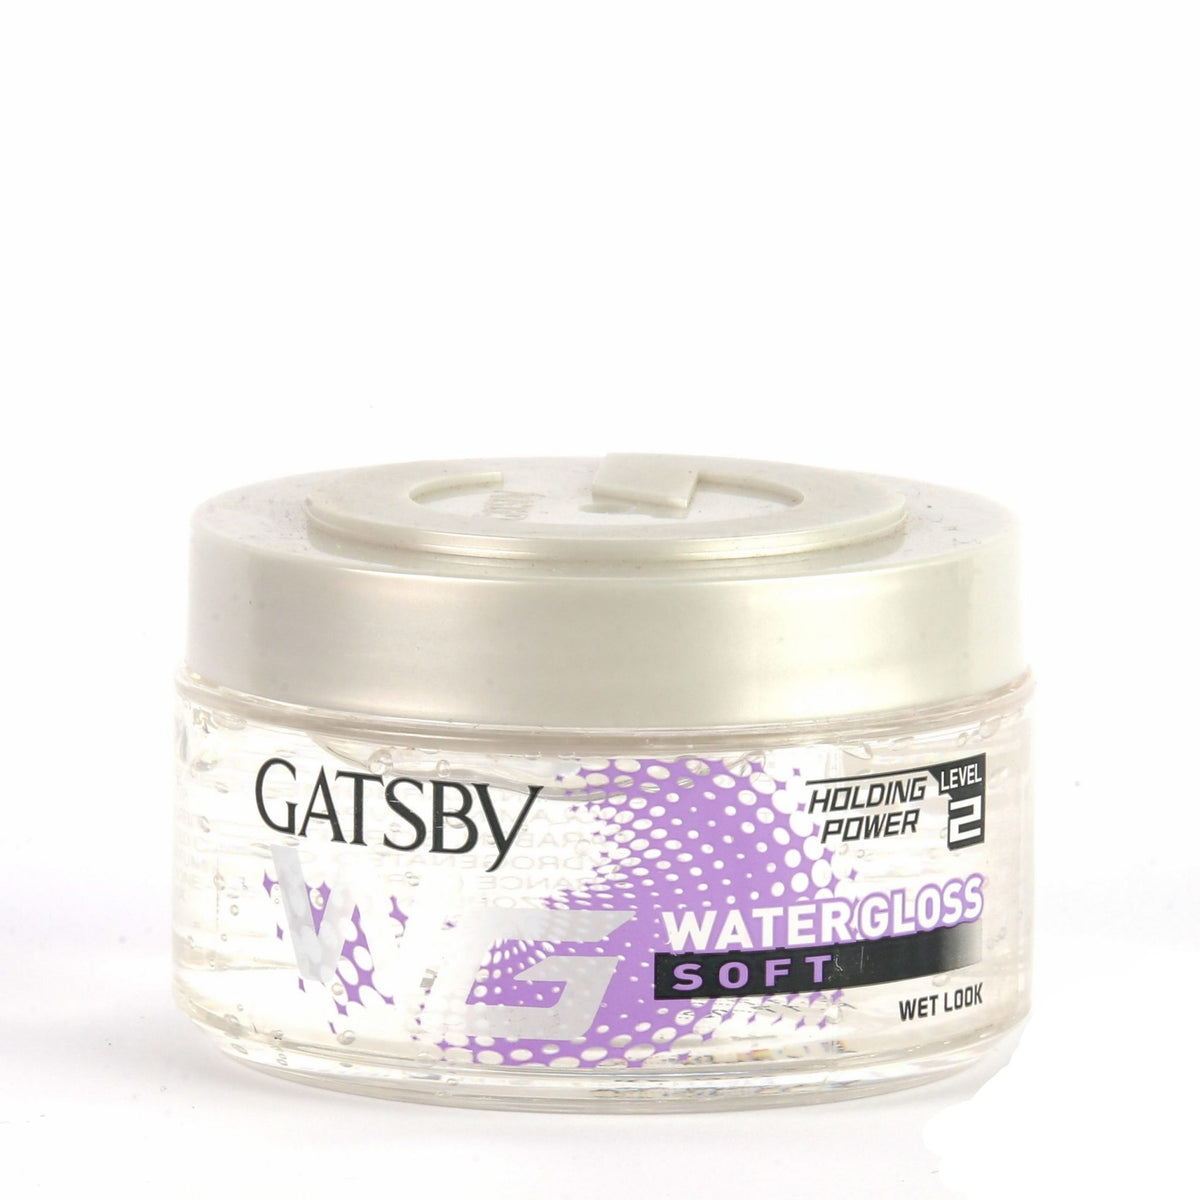 Gatsby Water Gloss Soft Level 02 150g freeshipping - lasertag.pk